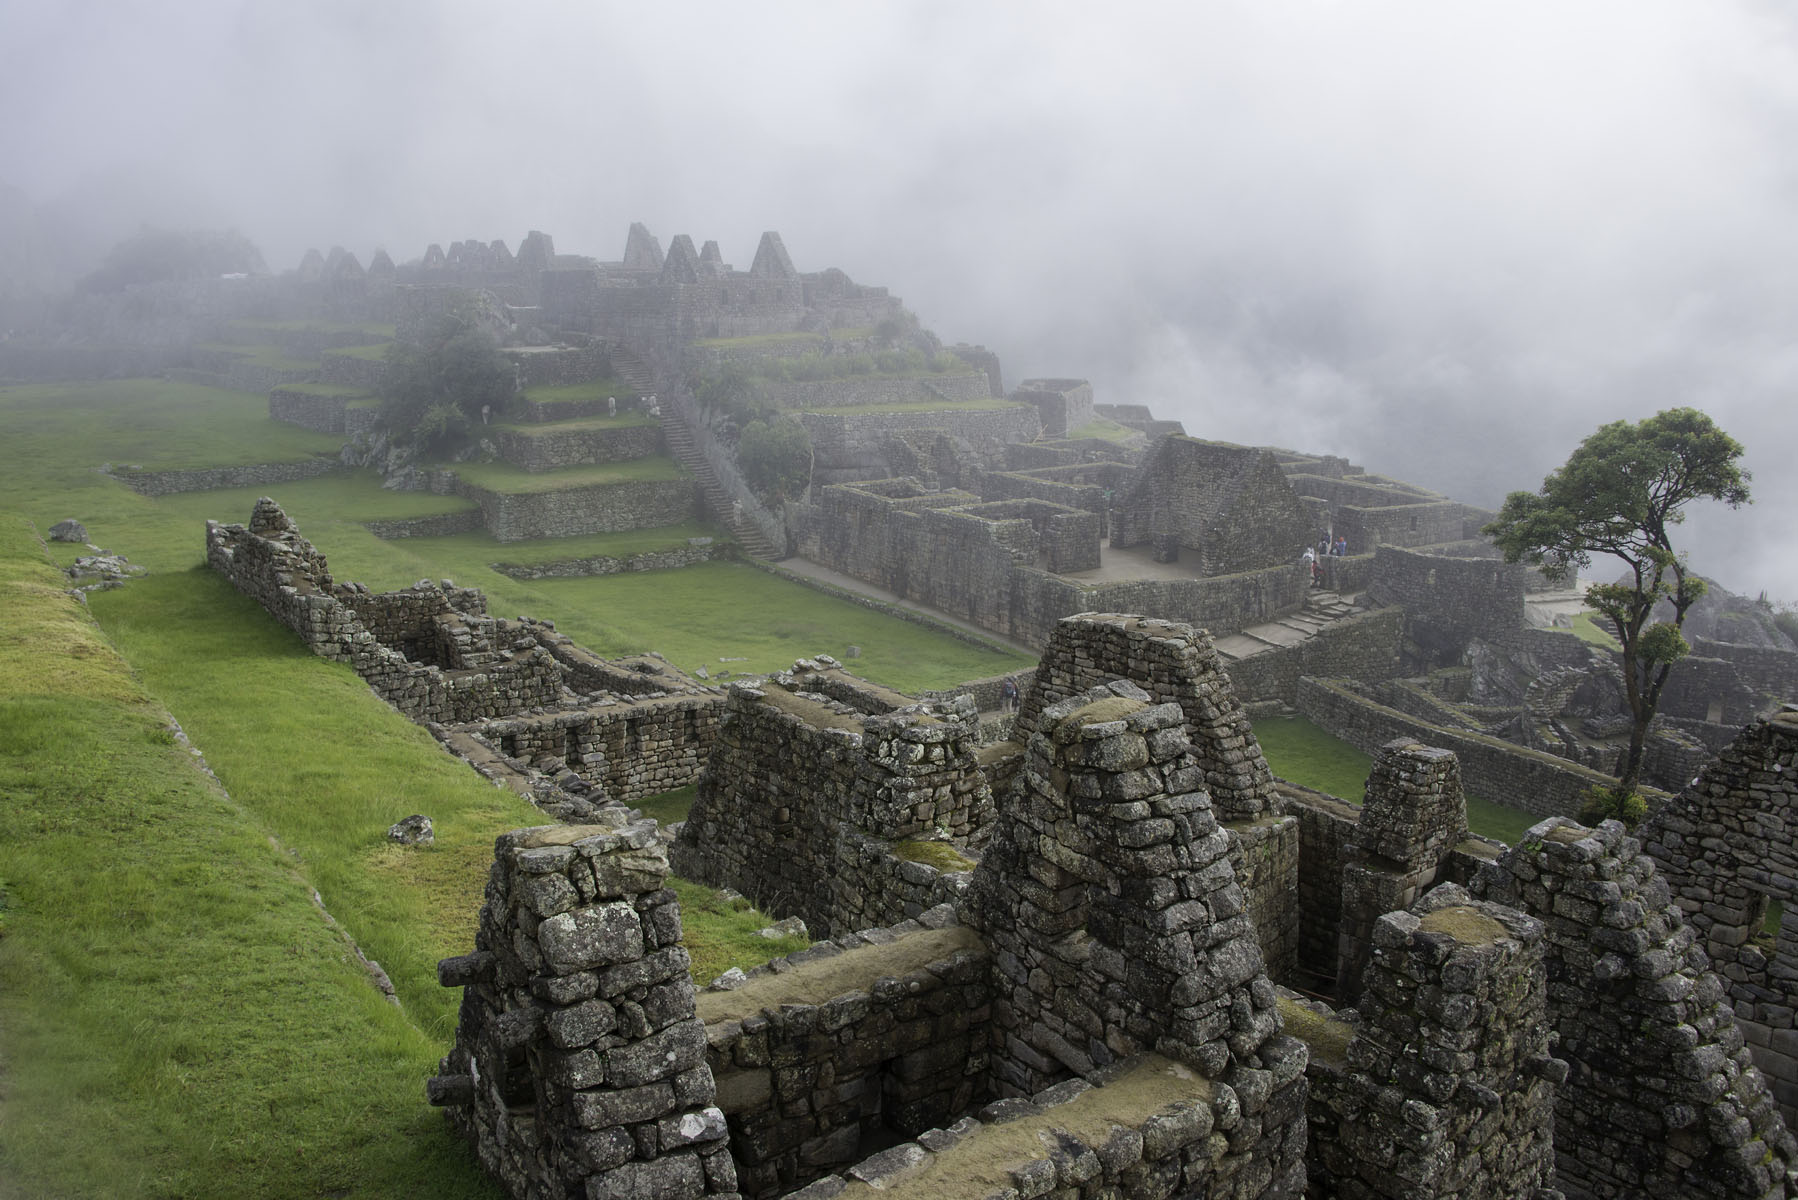 Overview of Machu Picchu City in Fog